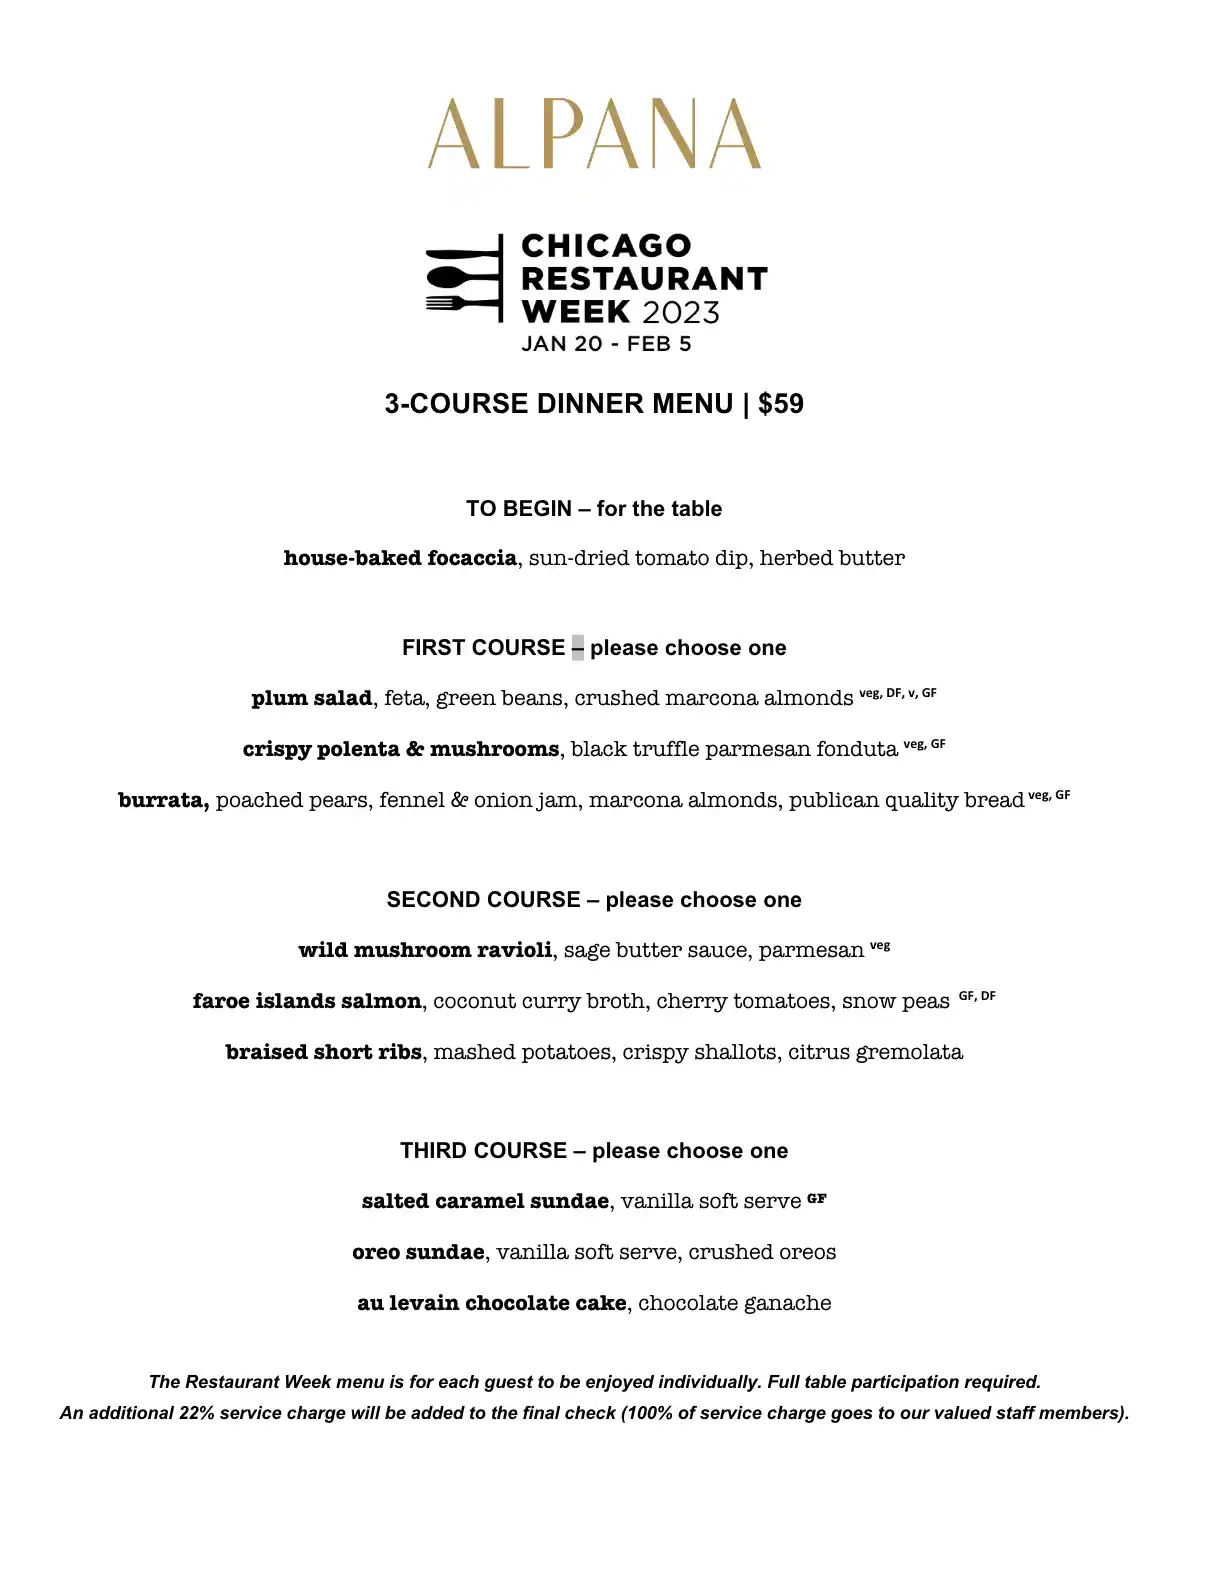 Chicago Restaurant Week 2023 Menu Alpana